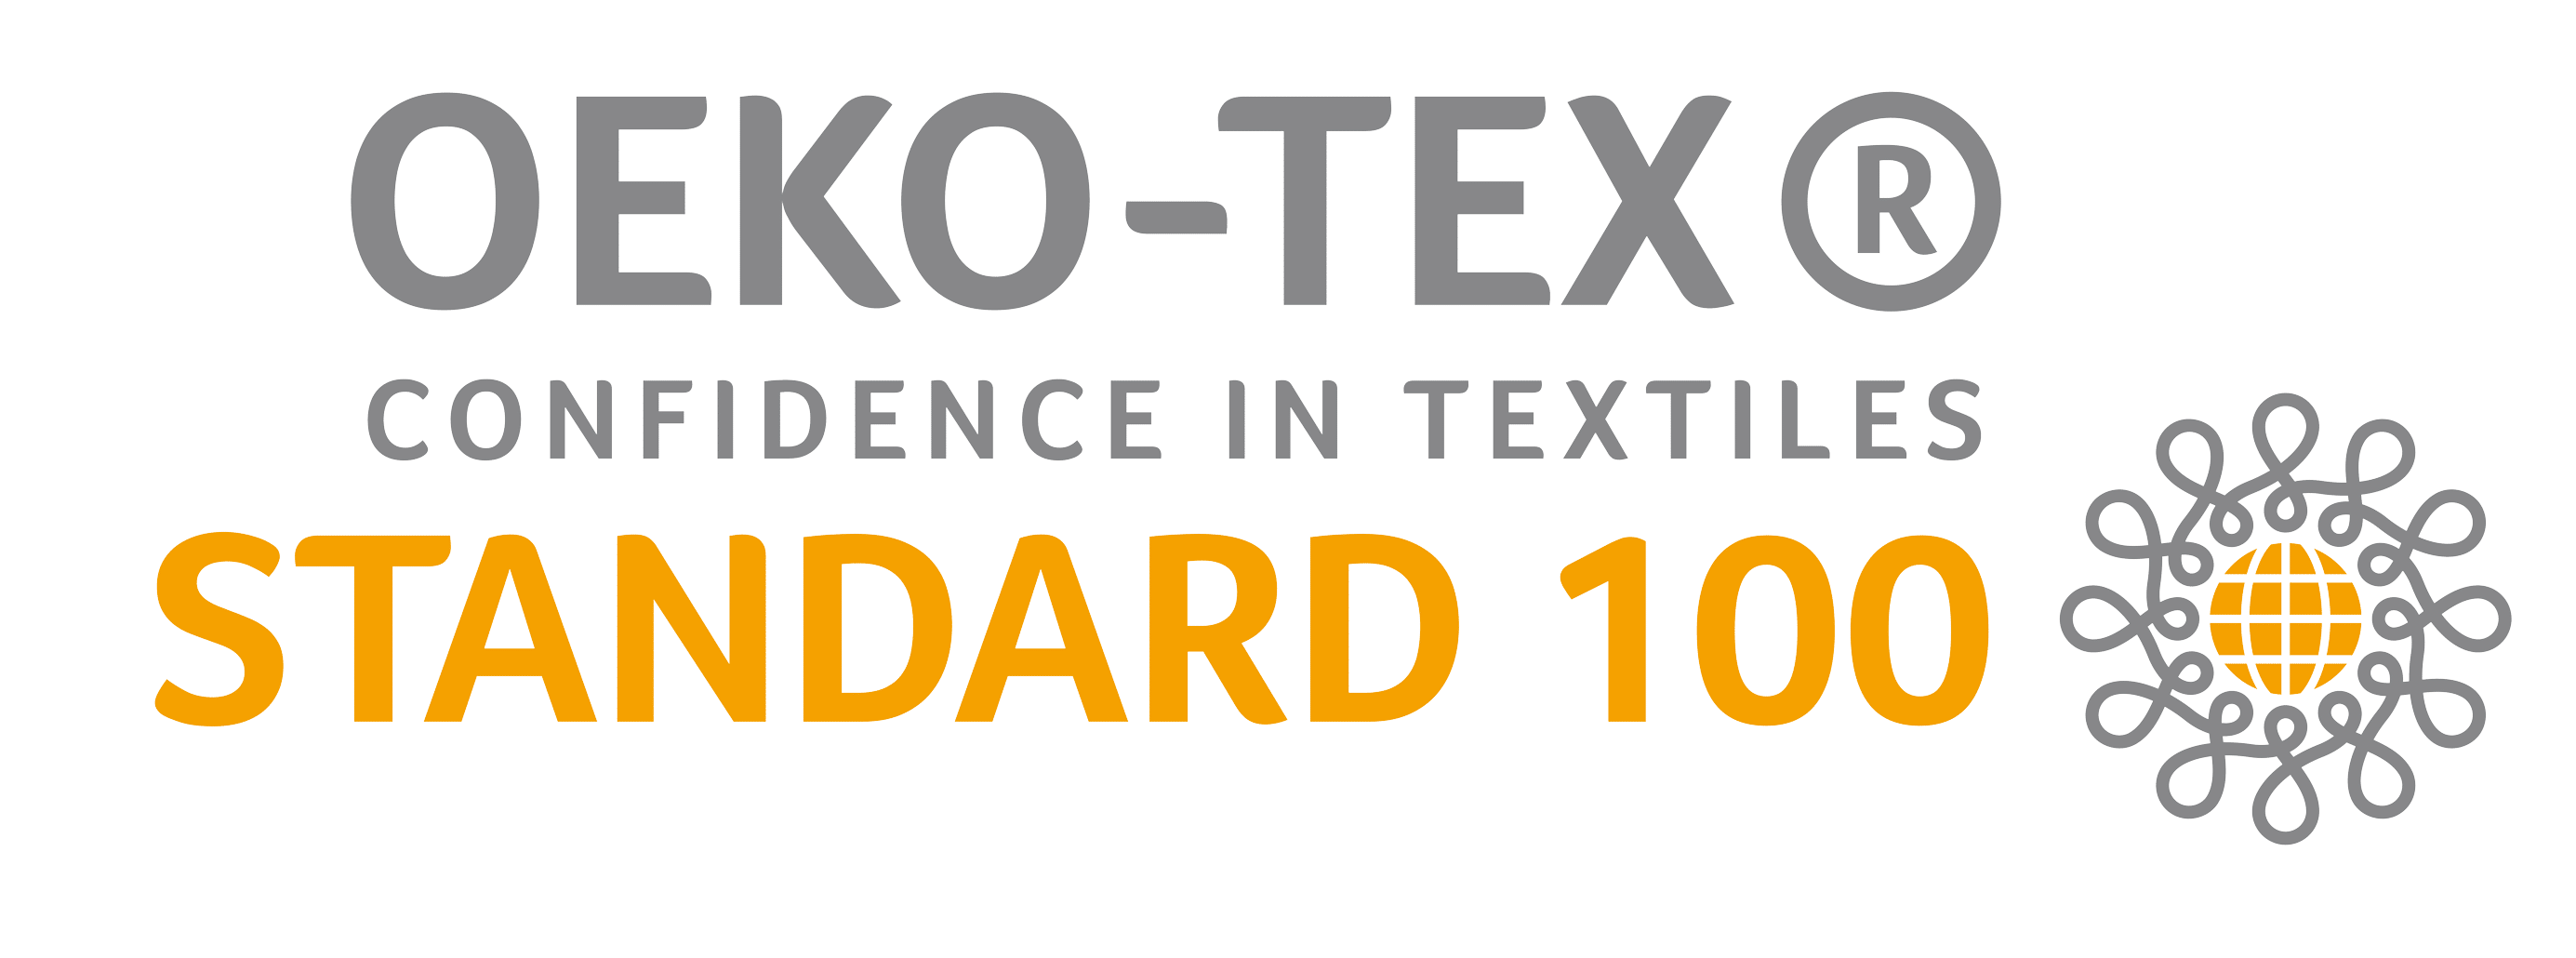 oeko-tex standard 100 mattress protector